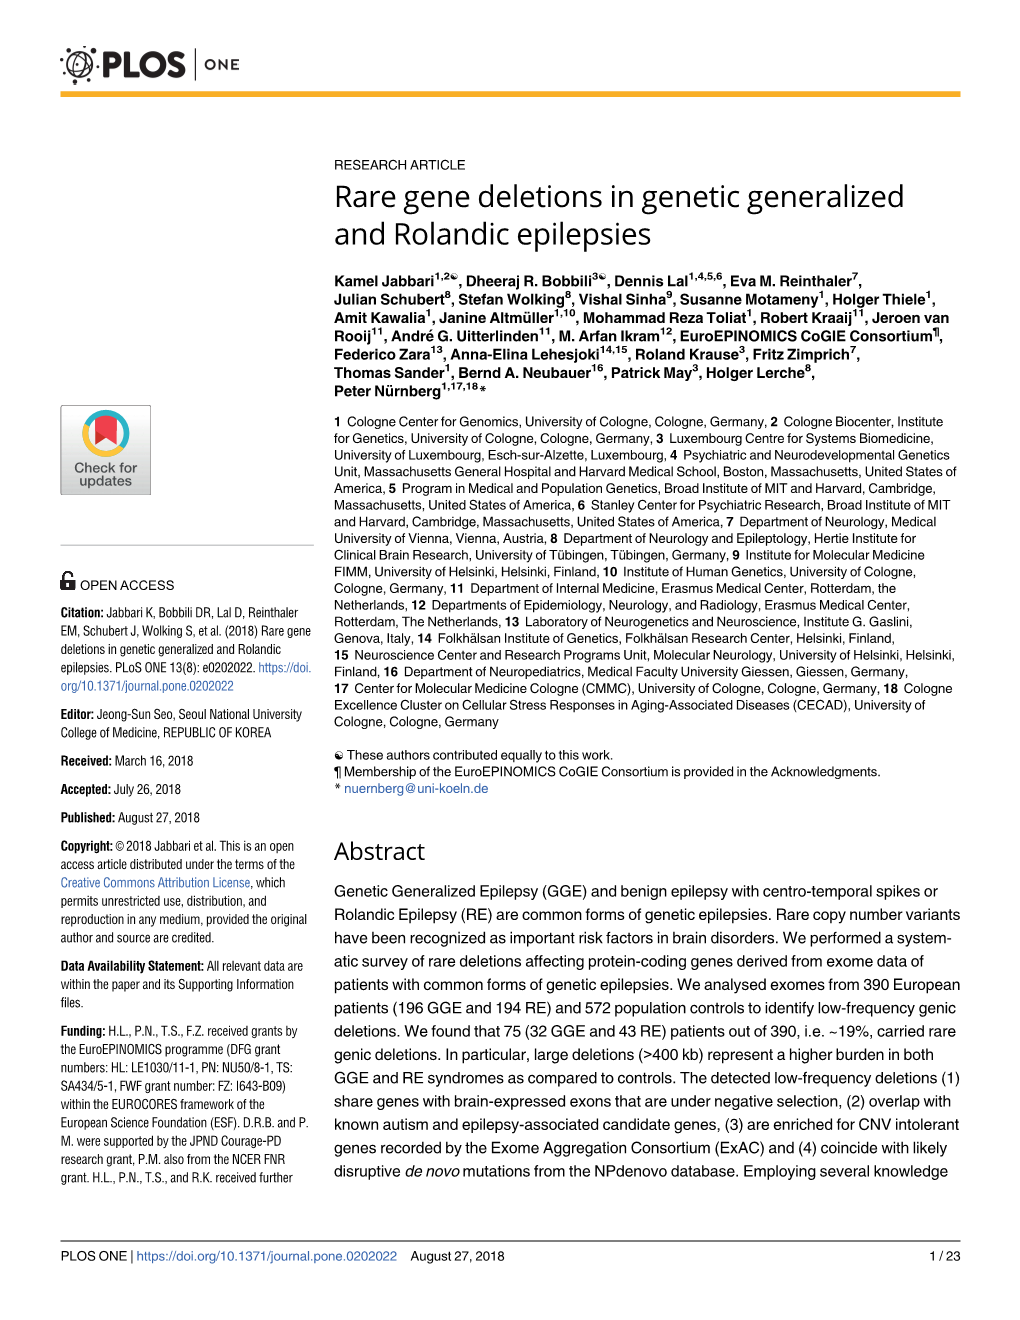 Rare Gene Deletions in Genetic Generalized and Rolandic Epilepsies